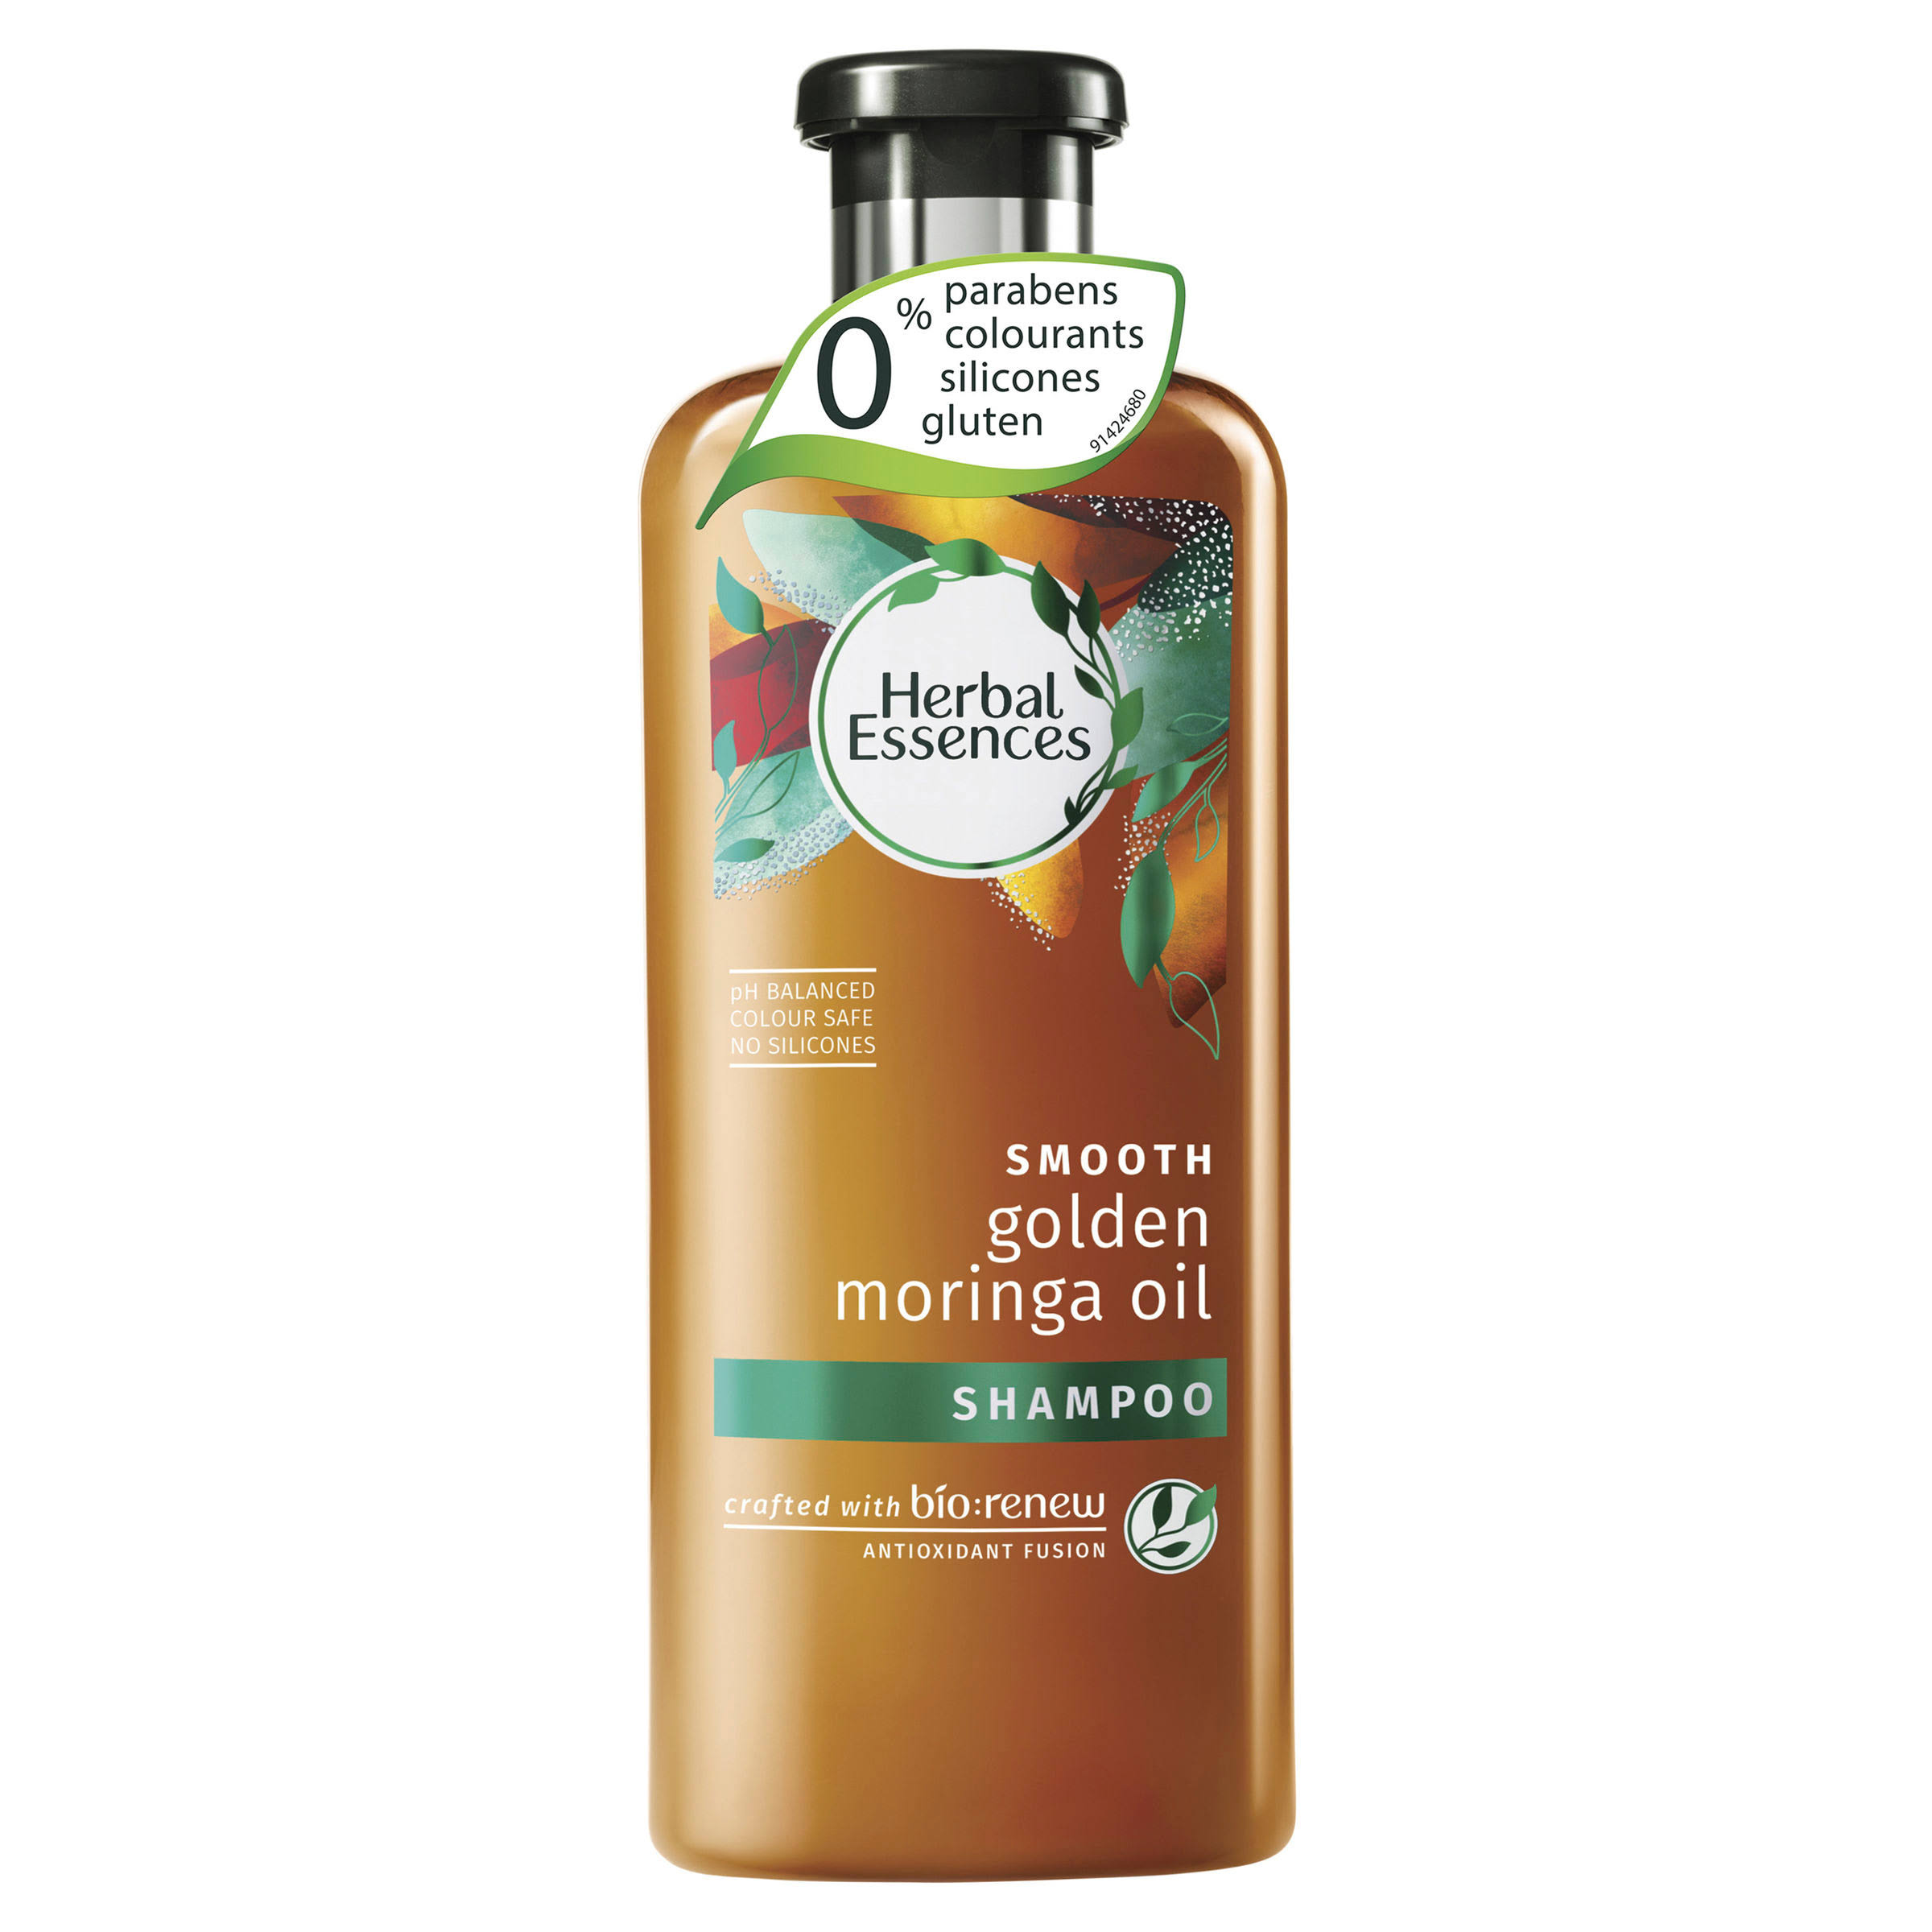 Herbal Essences Bio Renew Golden Moringa Oil Shampoo - 400ml